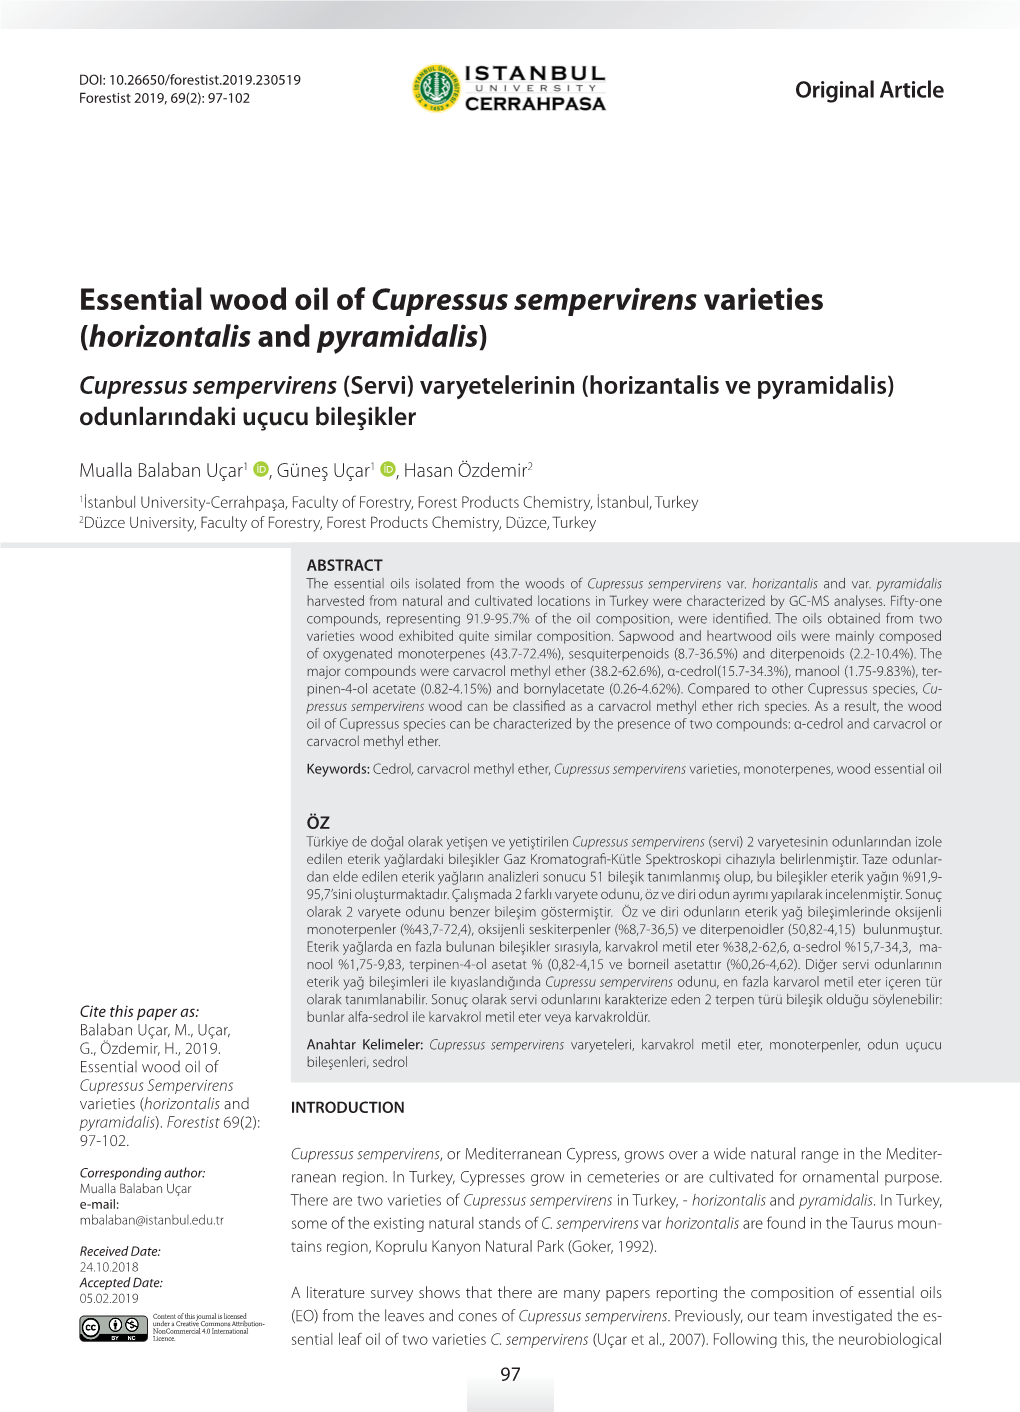 Essential Wood Oil of Cupressus Sempervirens Varieties (Horizontalis and Pyramidalis)